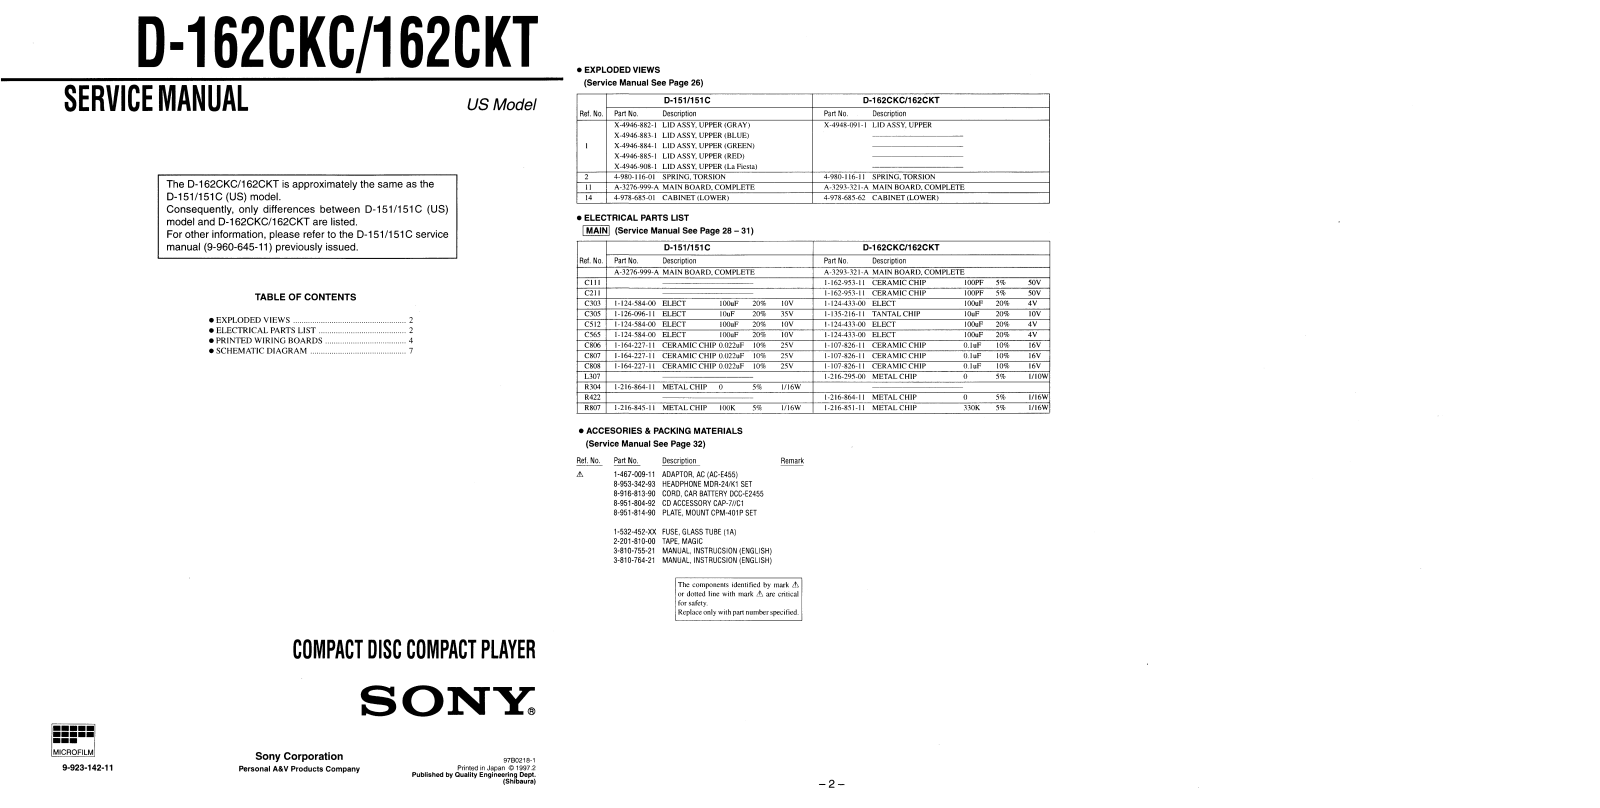 Sony D-162CKC, D-162CKT Service Manual